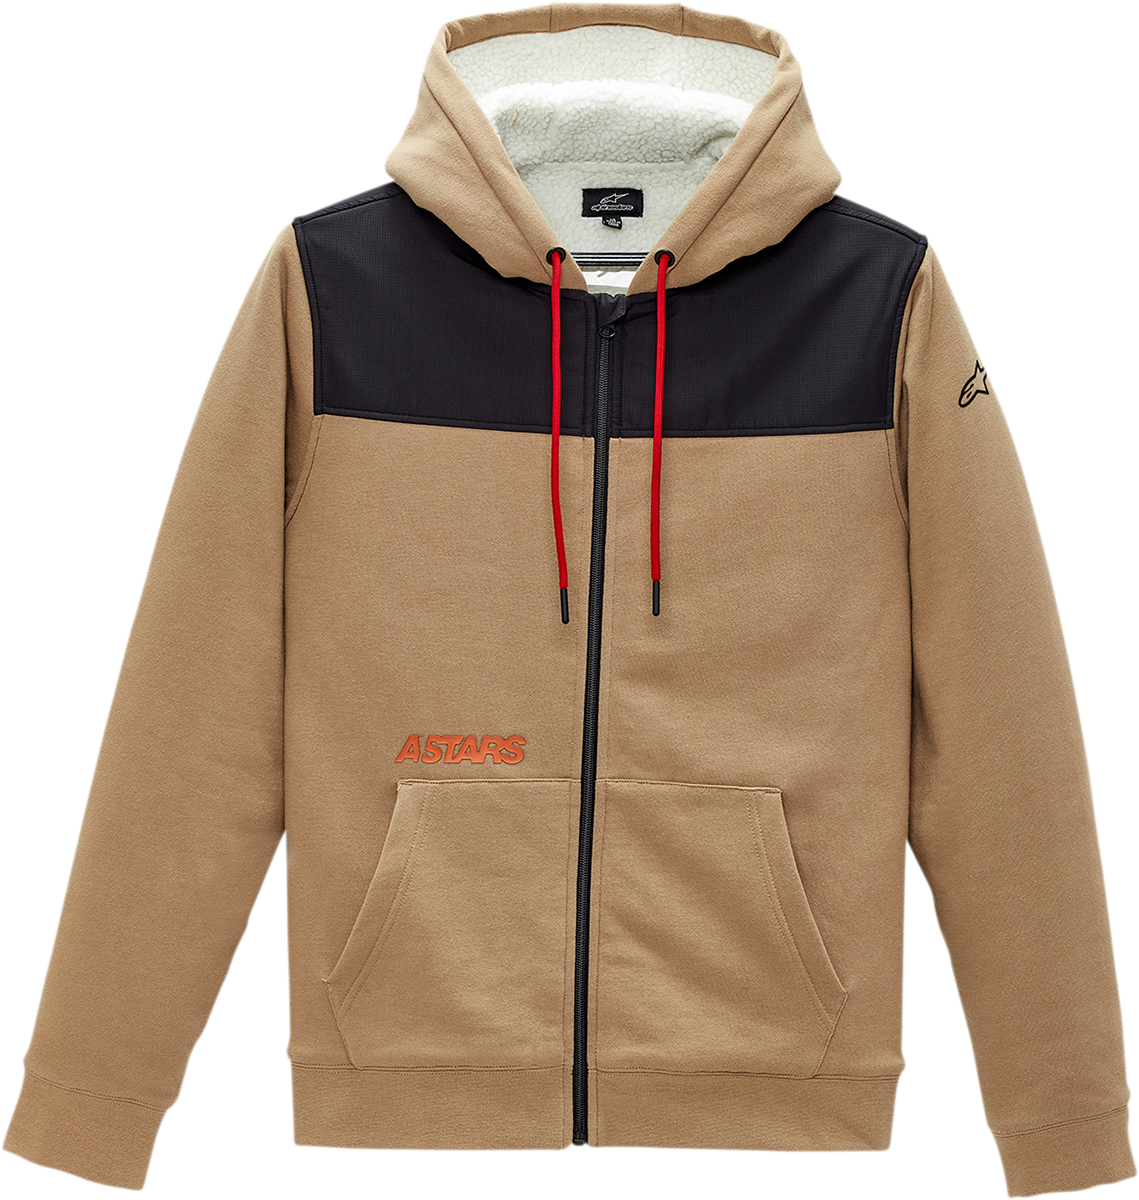 ALPINESTARS Alliance Sherpa Hybrid Jacket - Sand - Large 12131130223L